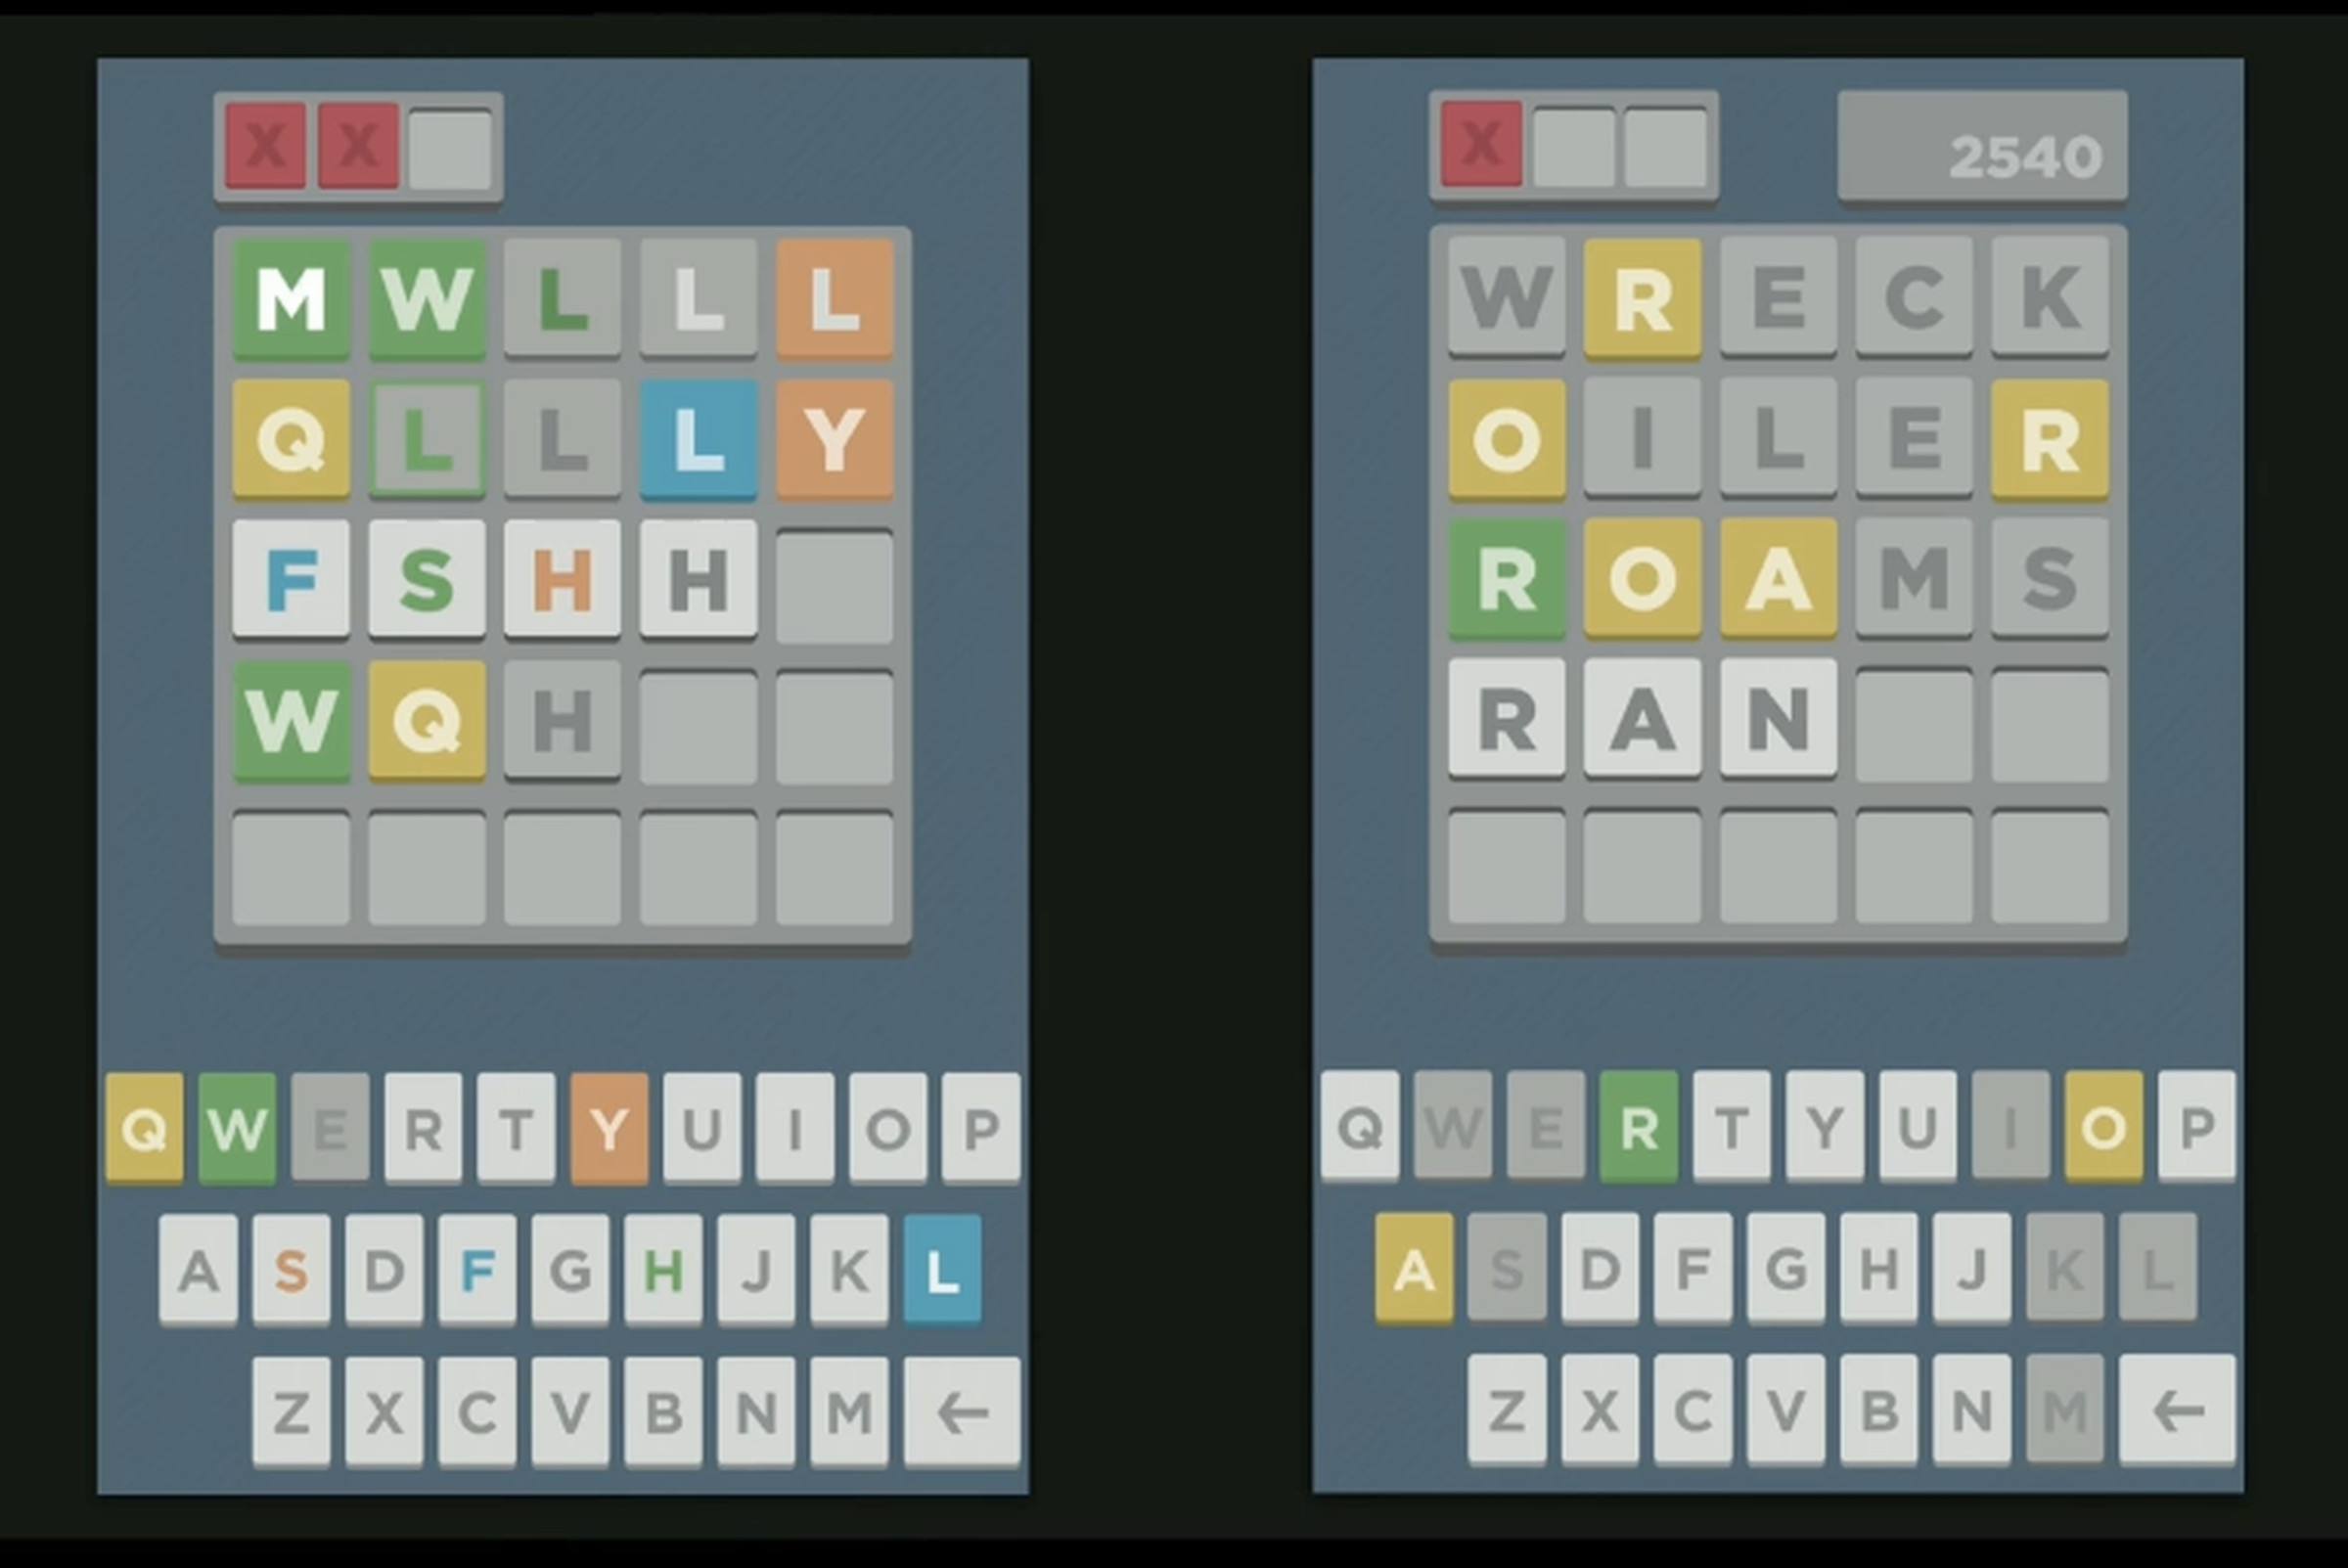 Screenshots of Wordle prototypes.